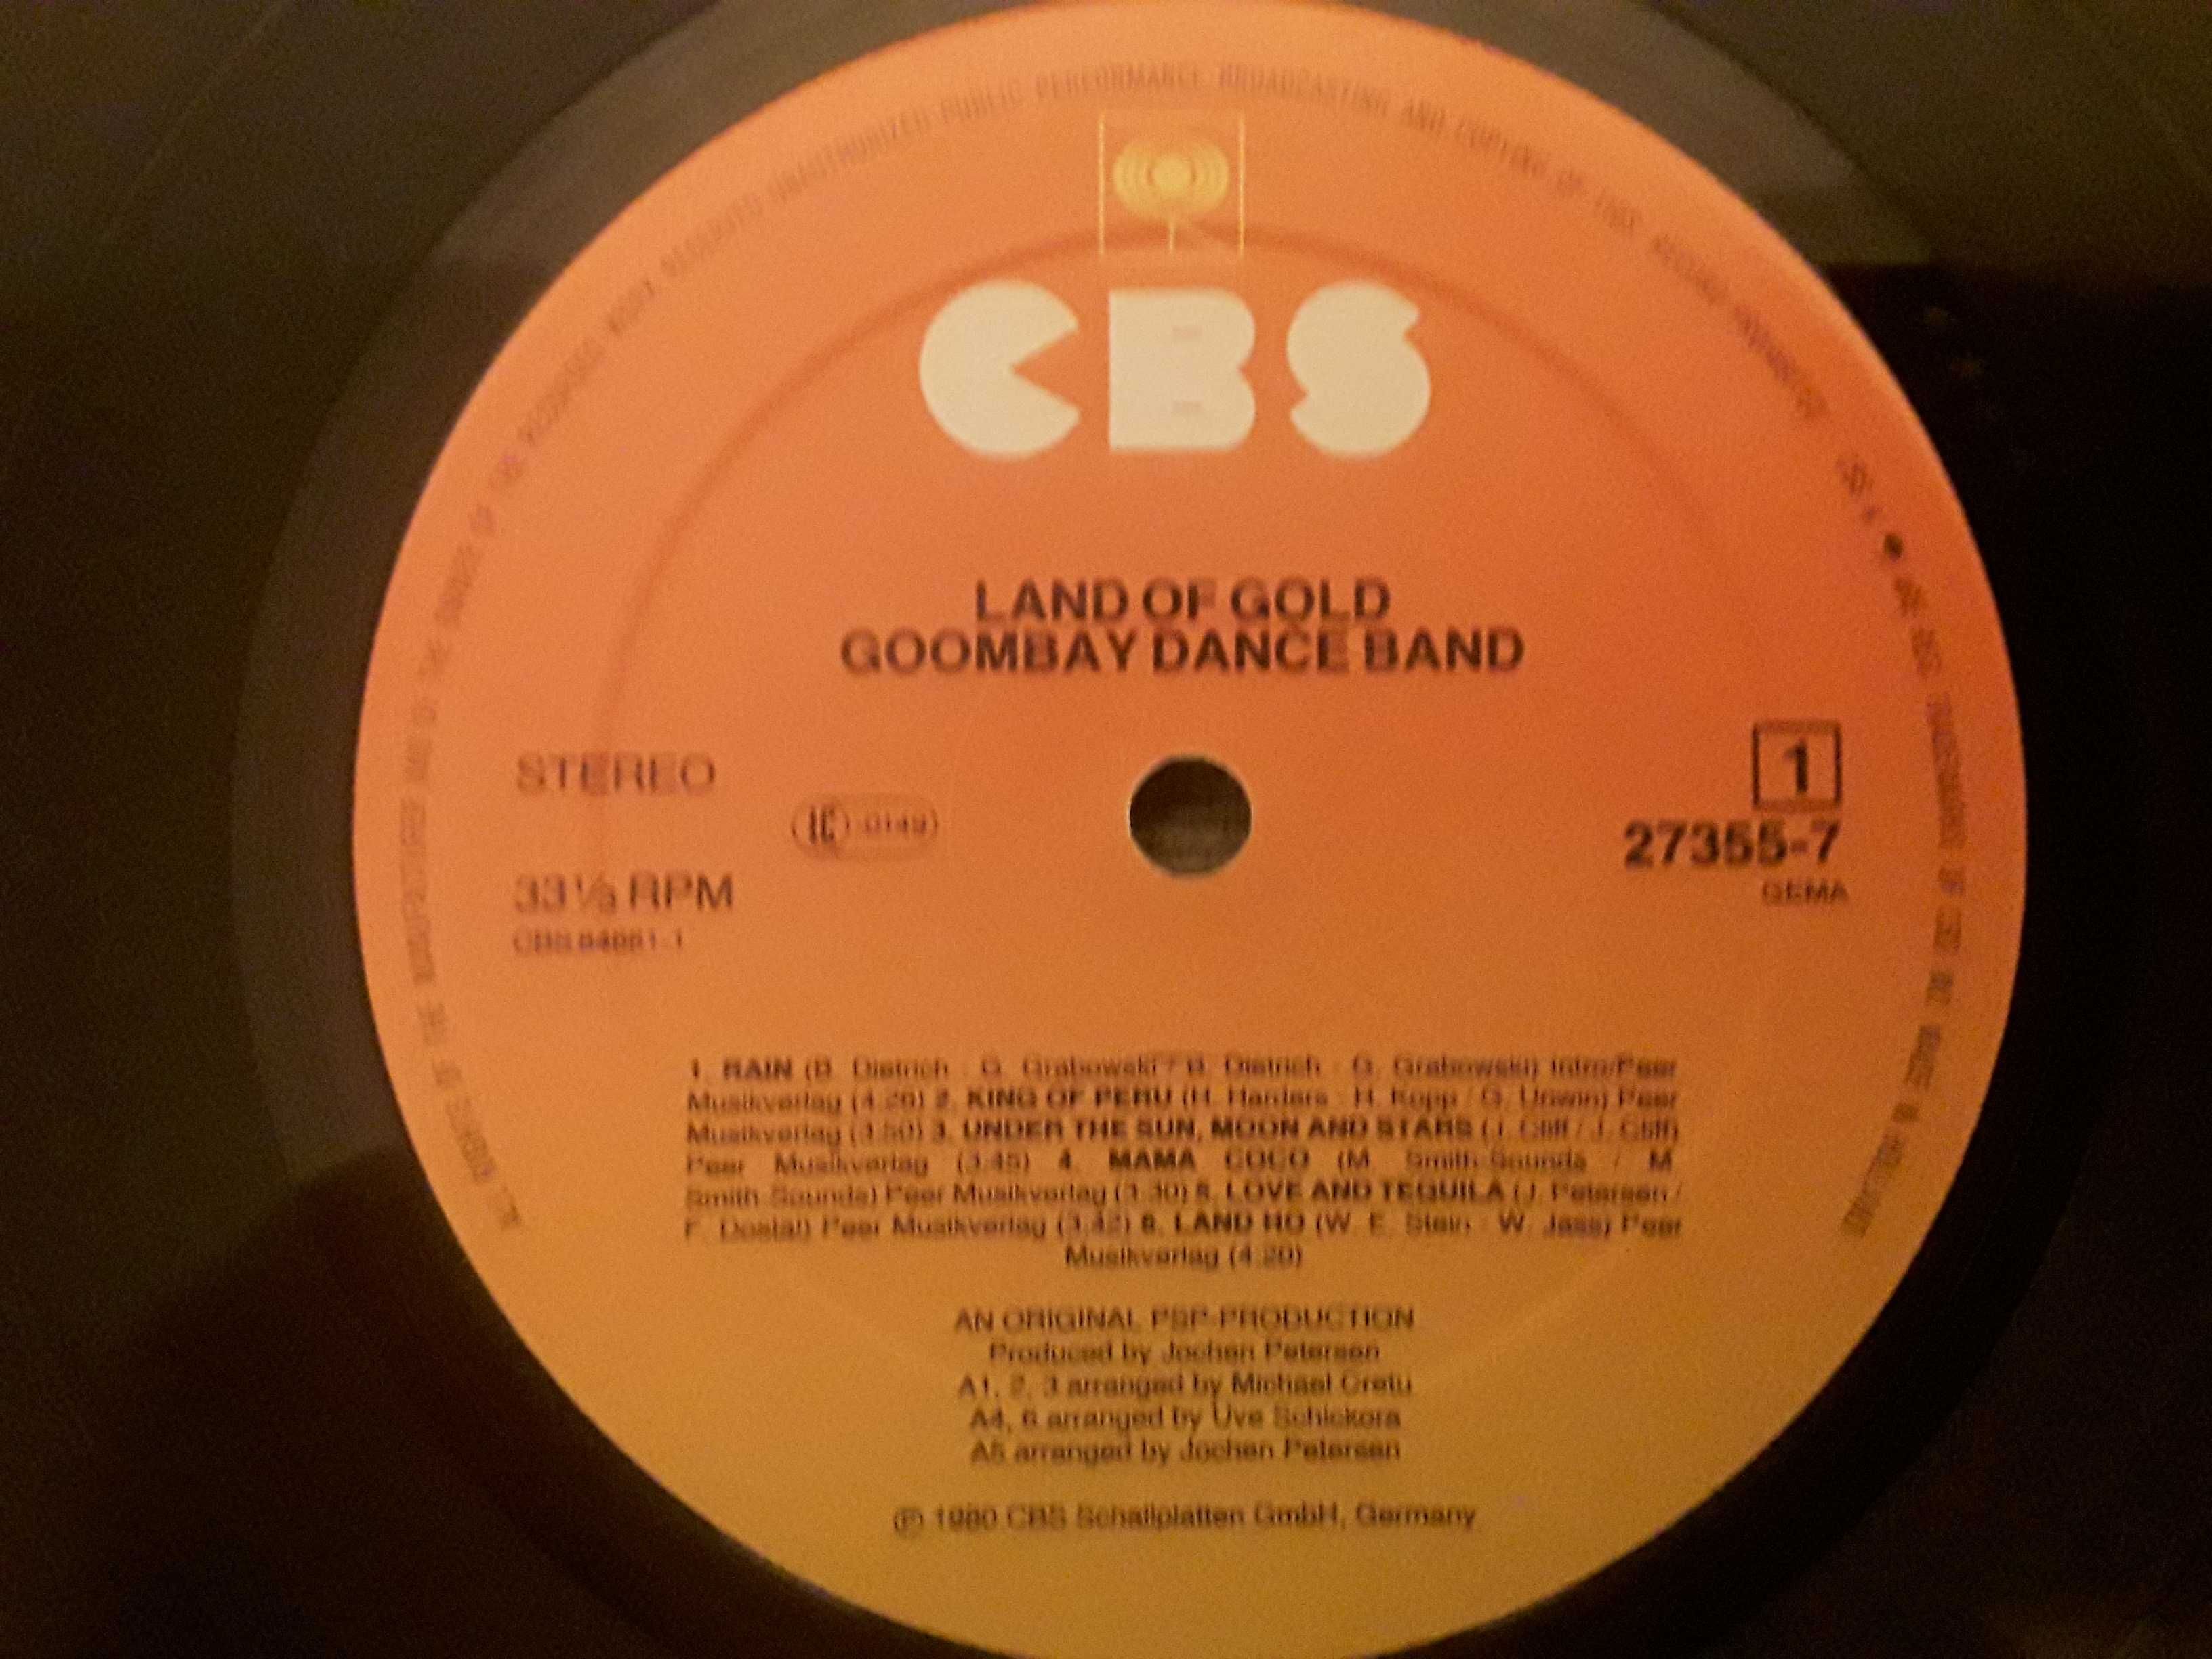 Виниловая пластинка Goombay Dance Band  Land Of Gold  1980 г.